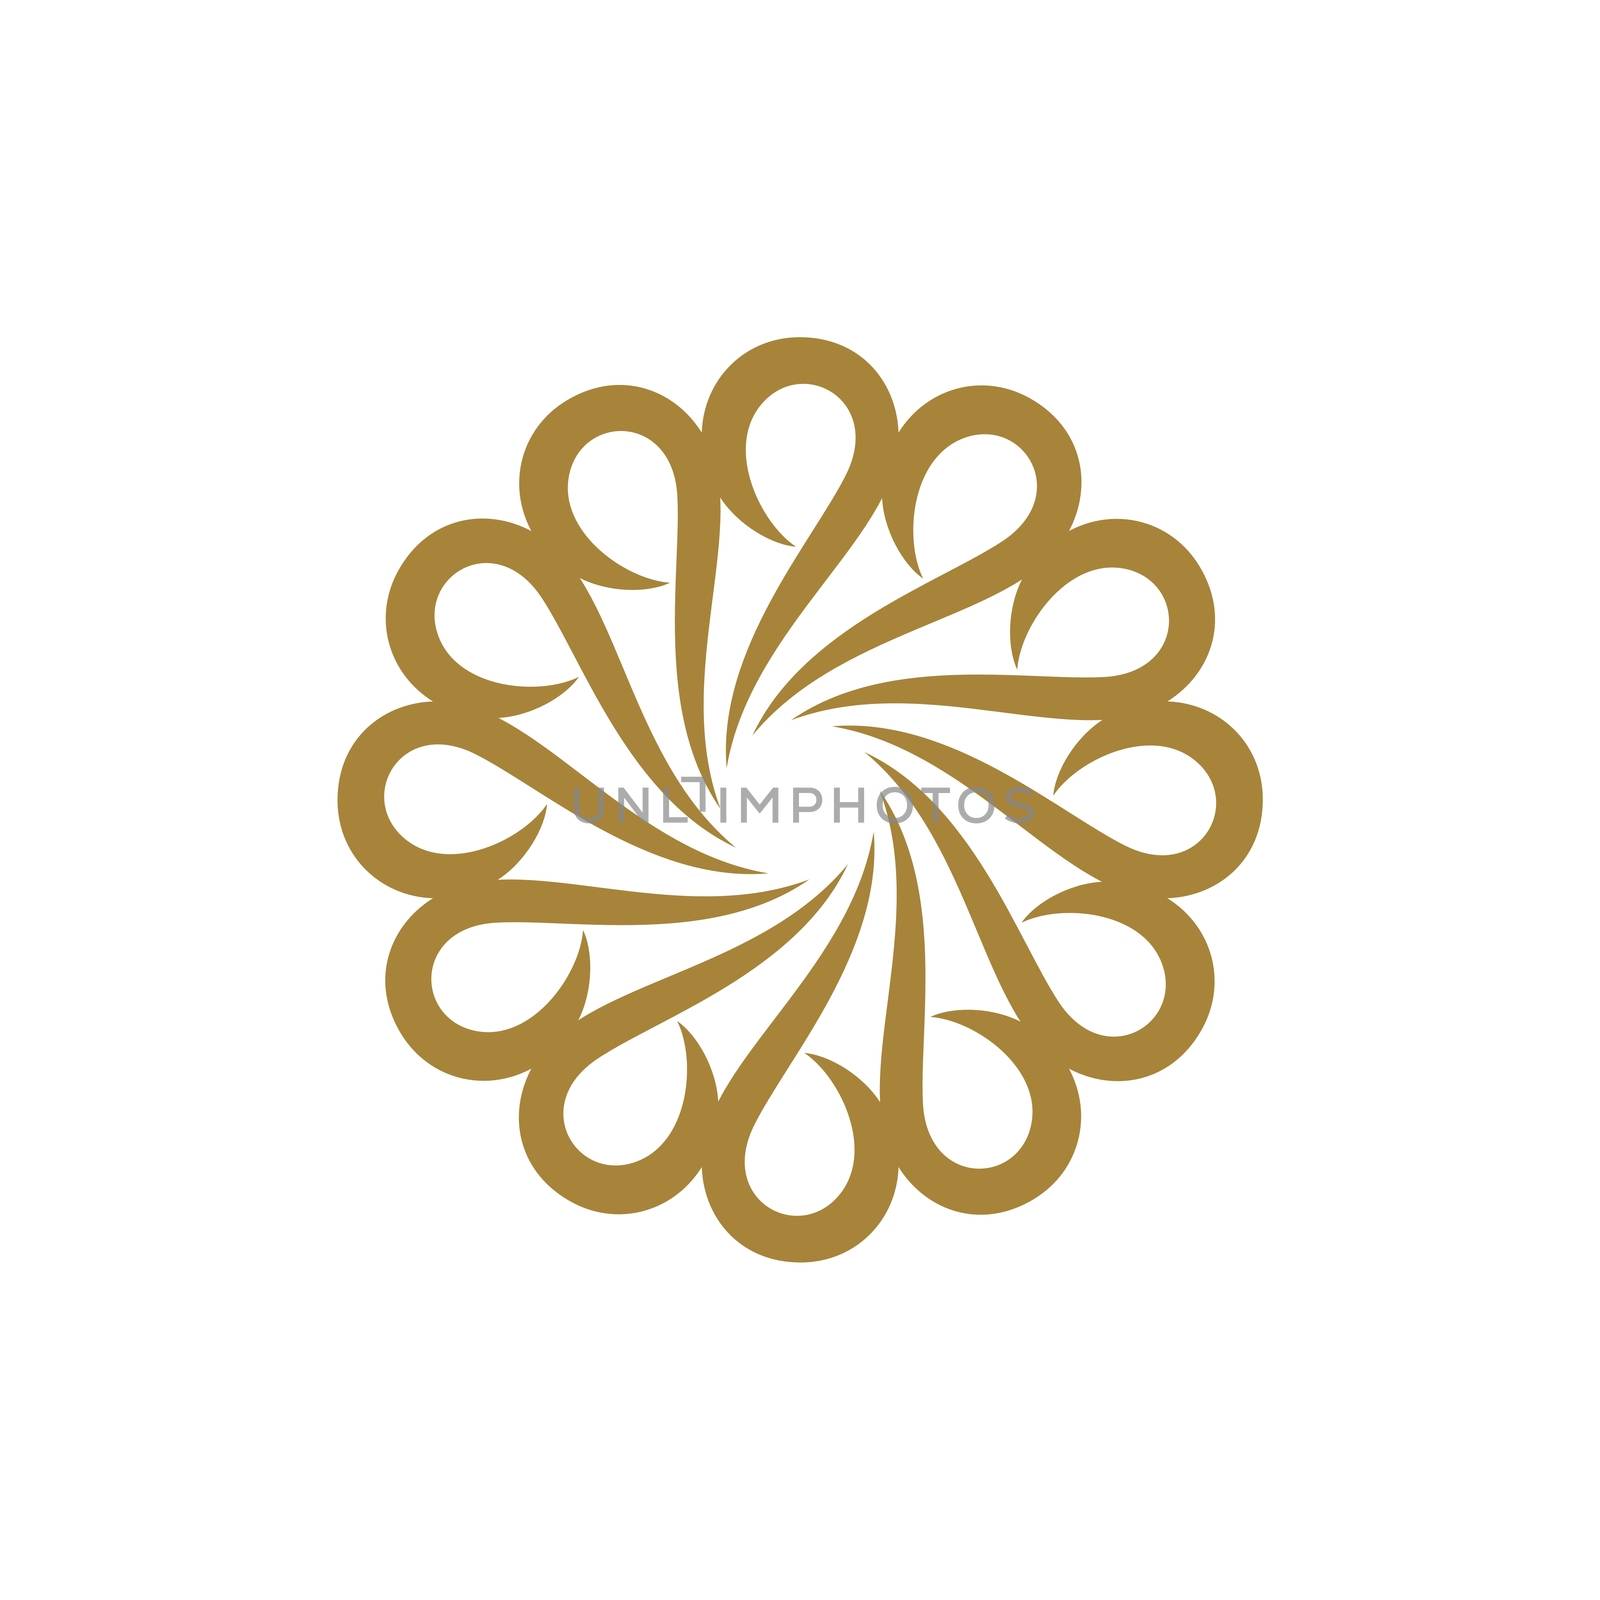 Gold Ornamental Flower Logo Template Illustration Design. Vector EPS 10.